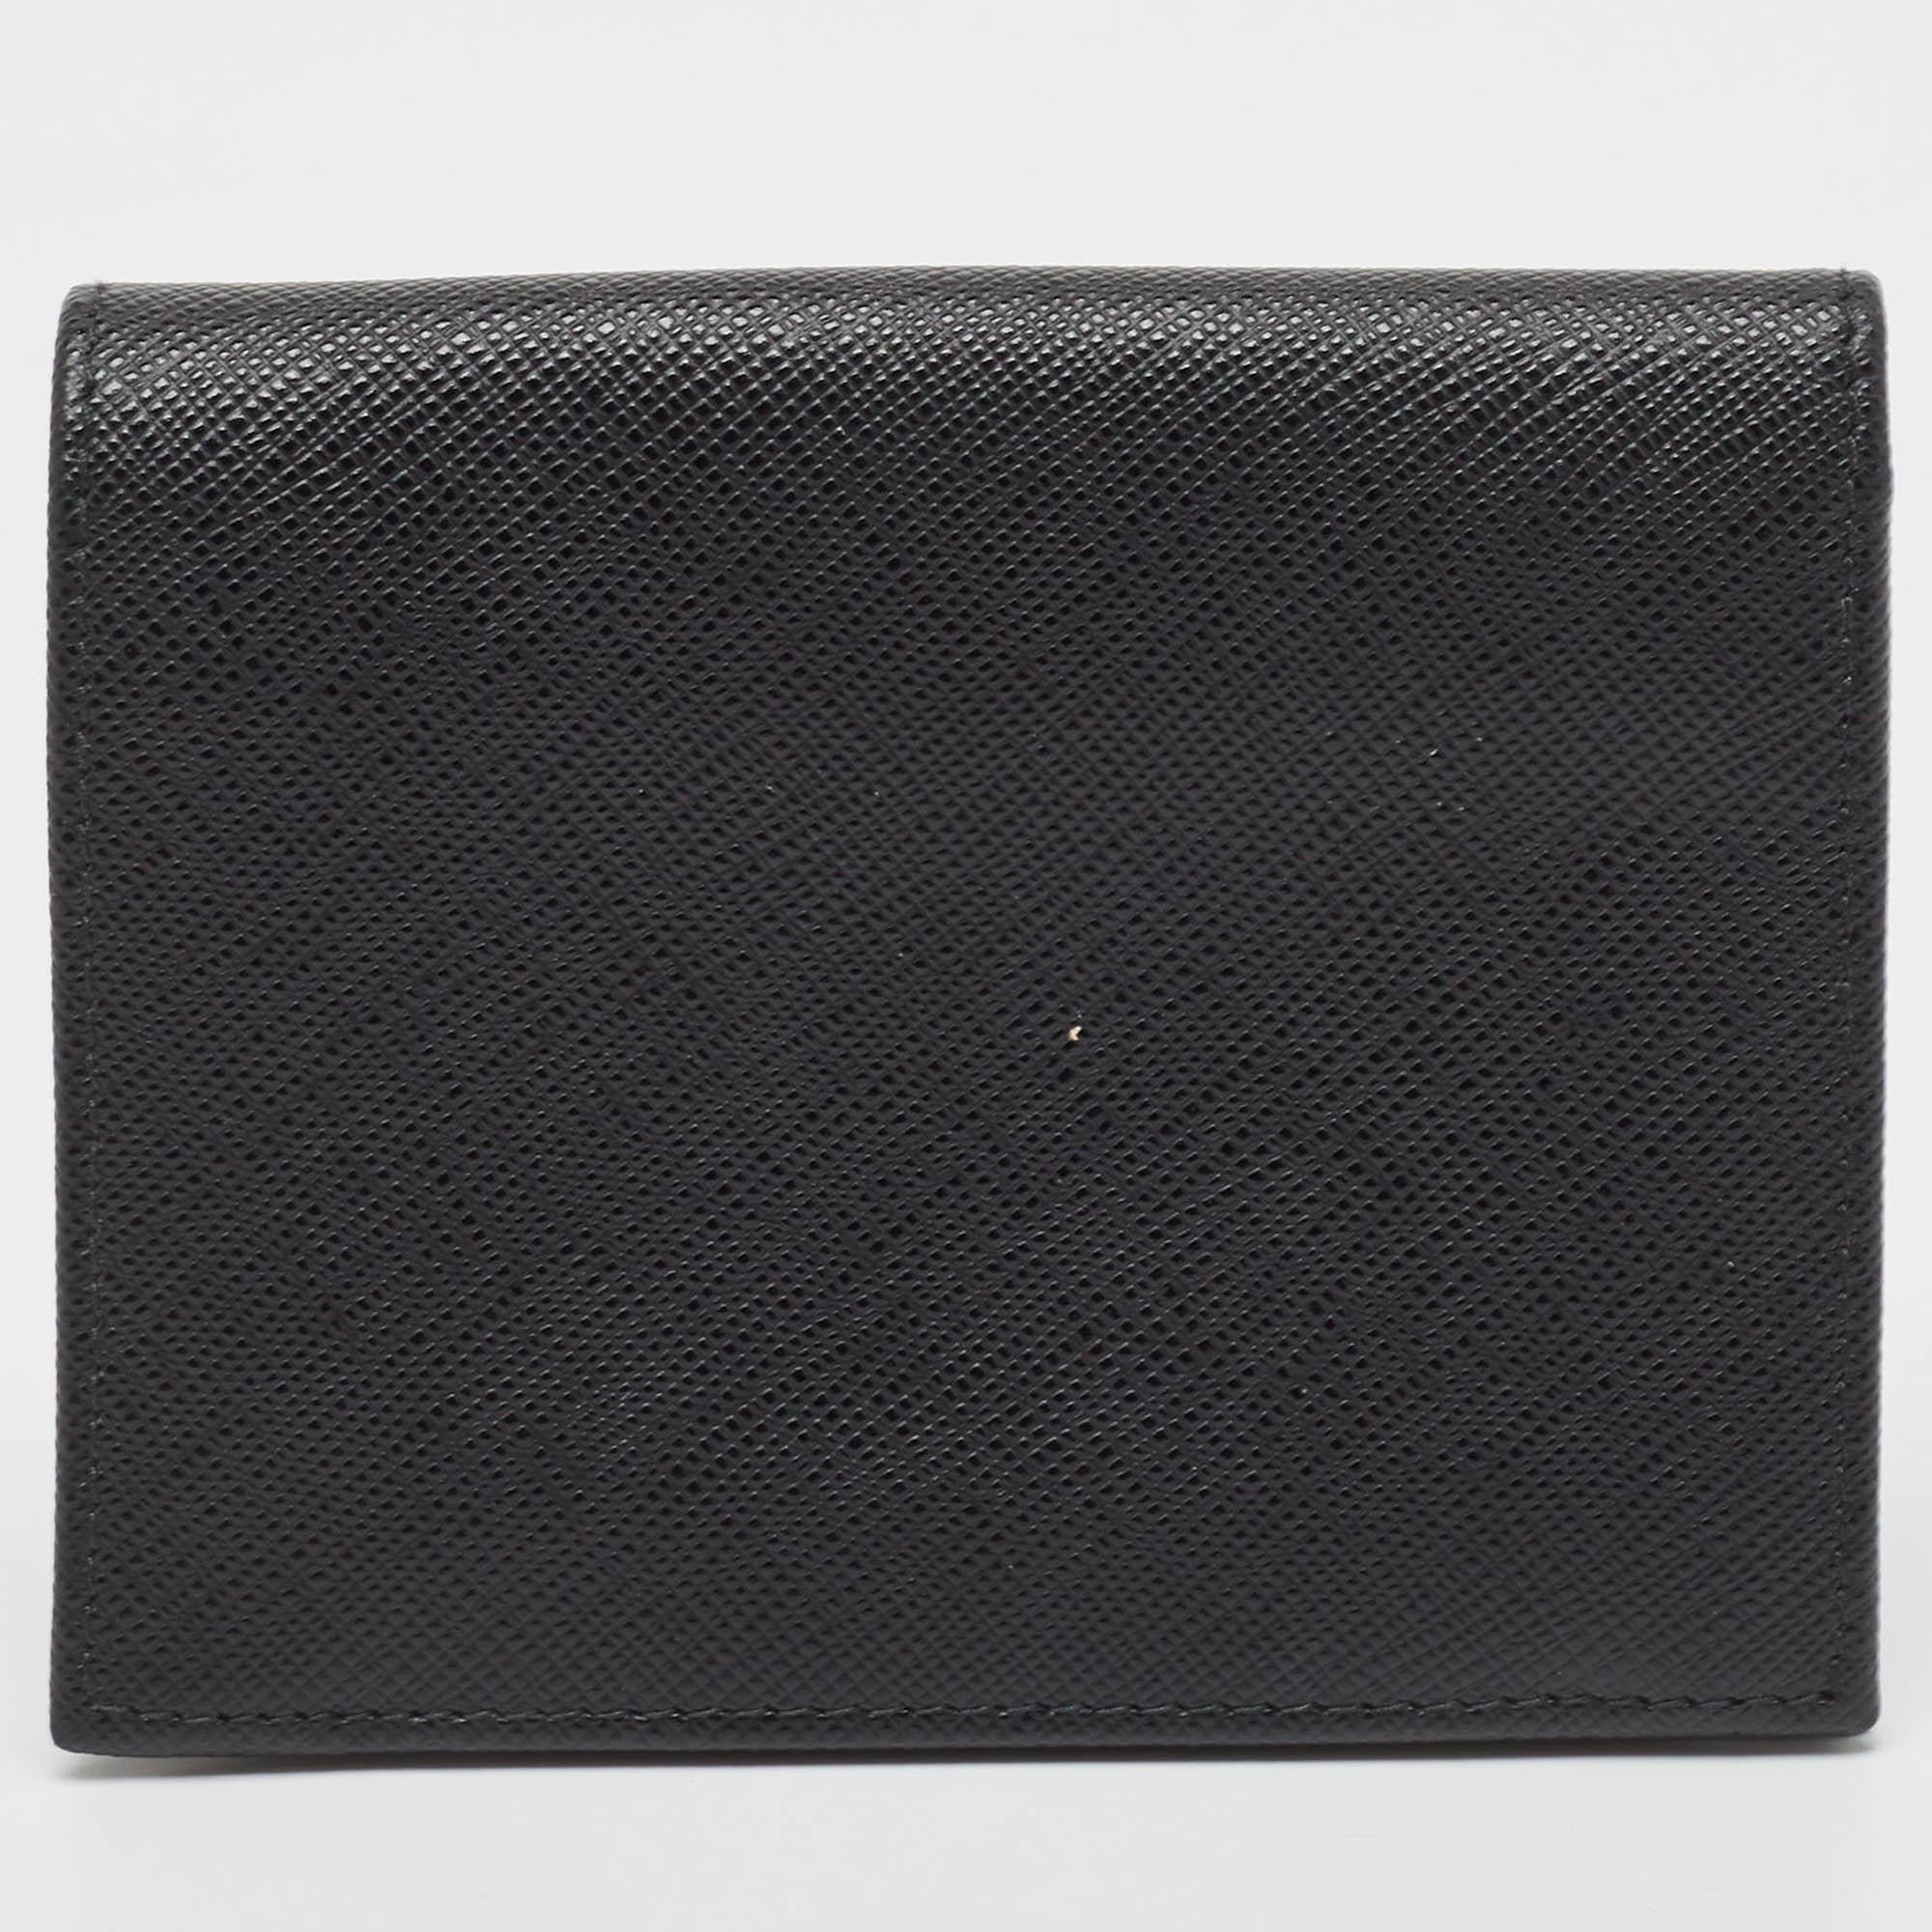 Men's Prada Black Leather Bifold Wallet